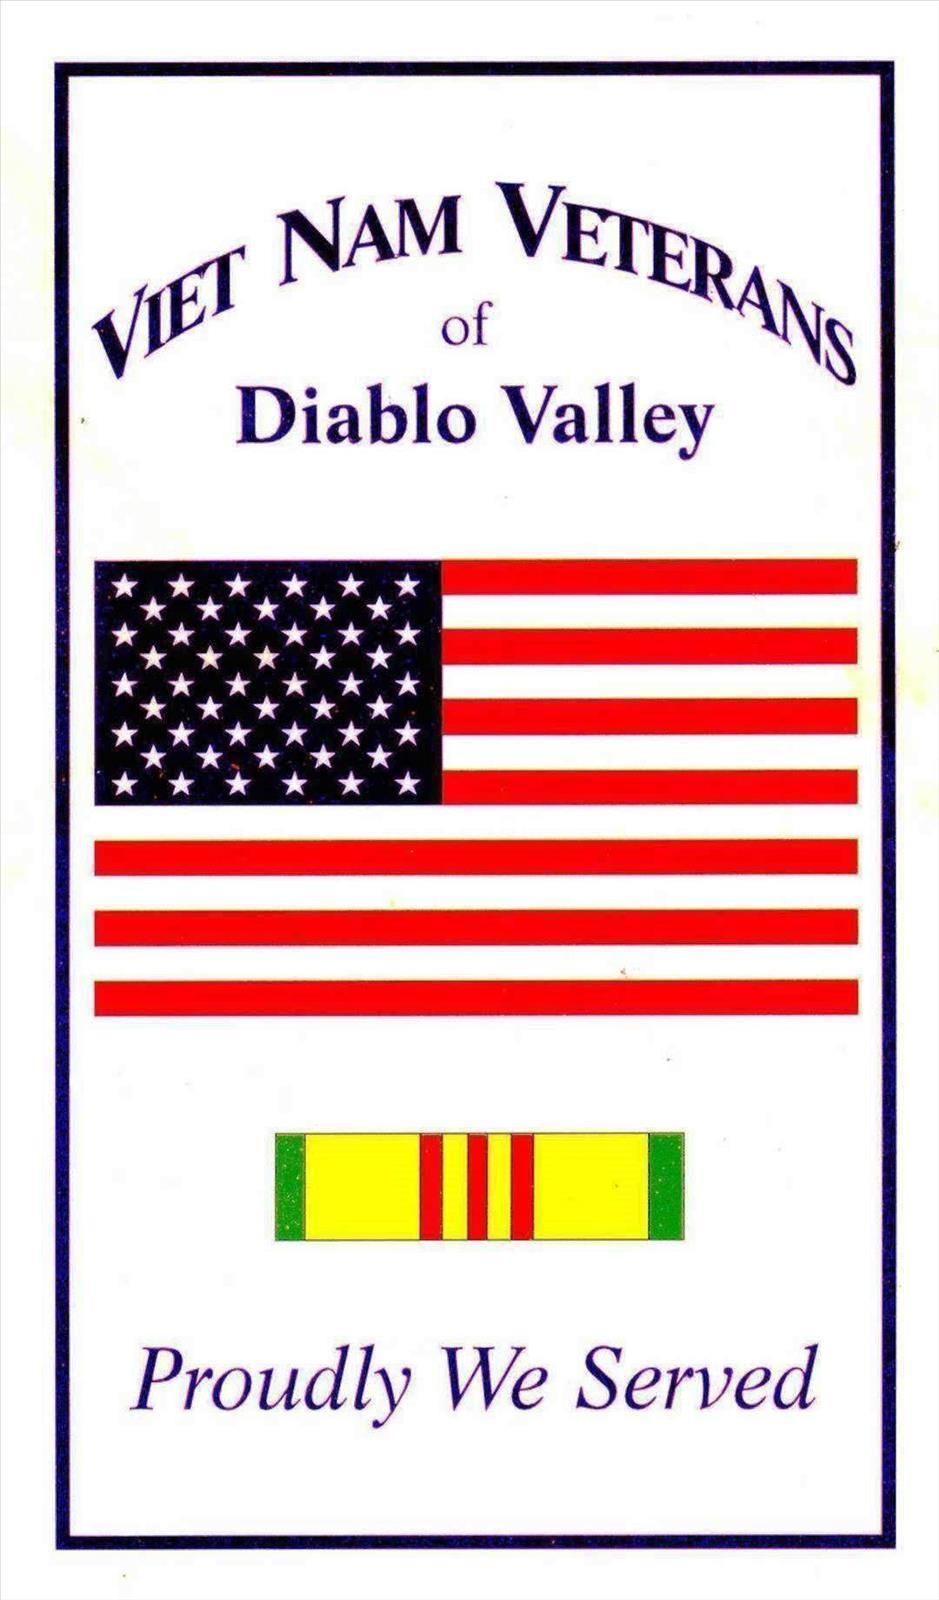 Vietnam veterans of diablo valley logo20180411 13749 xp2mnw